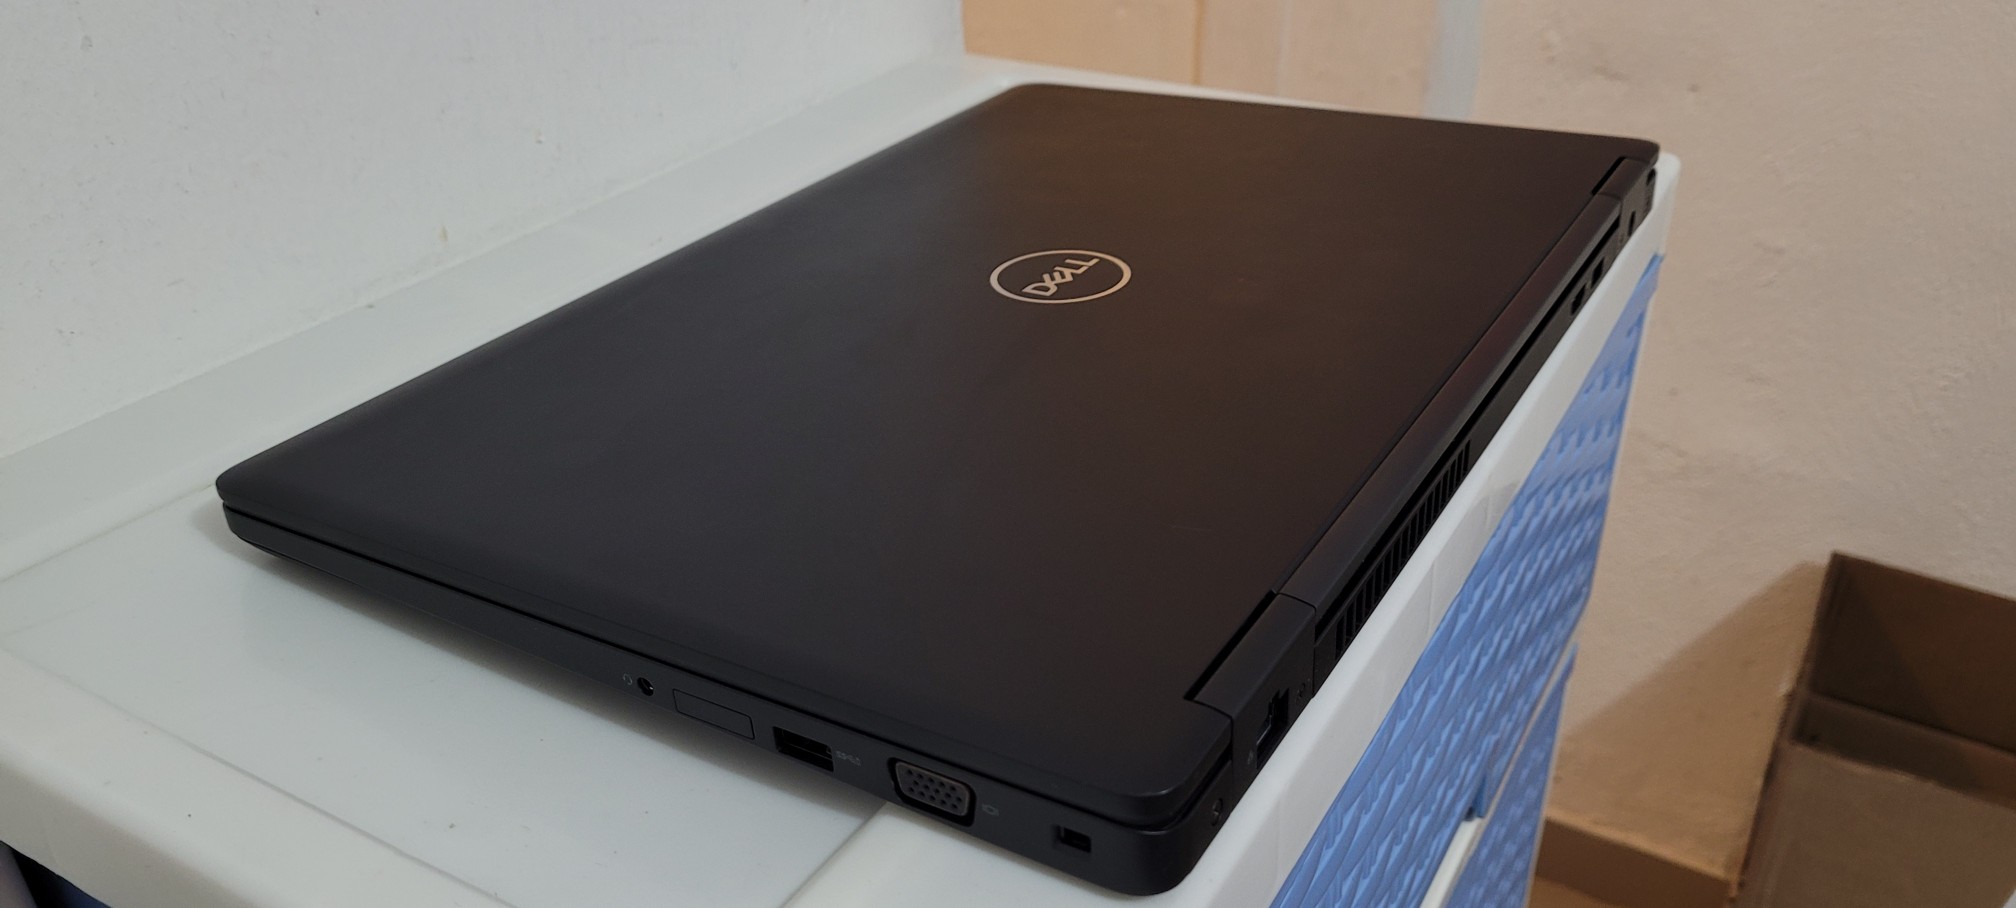 computadoras y laptops - Dell 5591 17 Pulg Core i7 8va Gen Ram 16gb Disco 512gb SSD Video 8gb 2